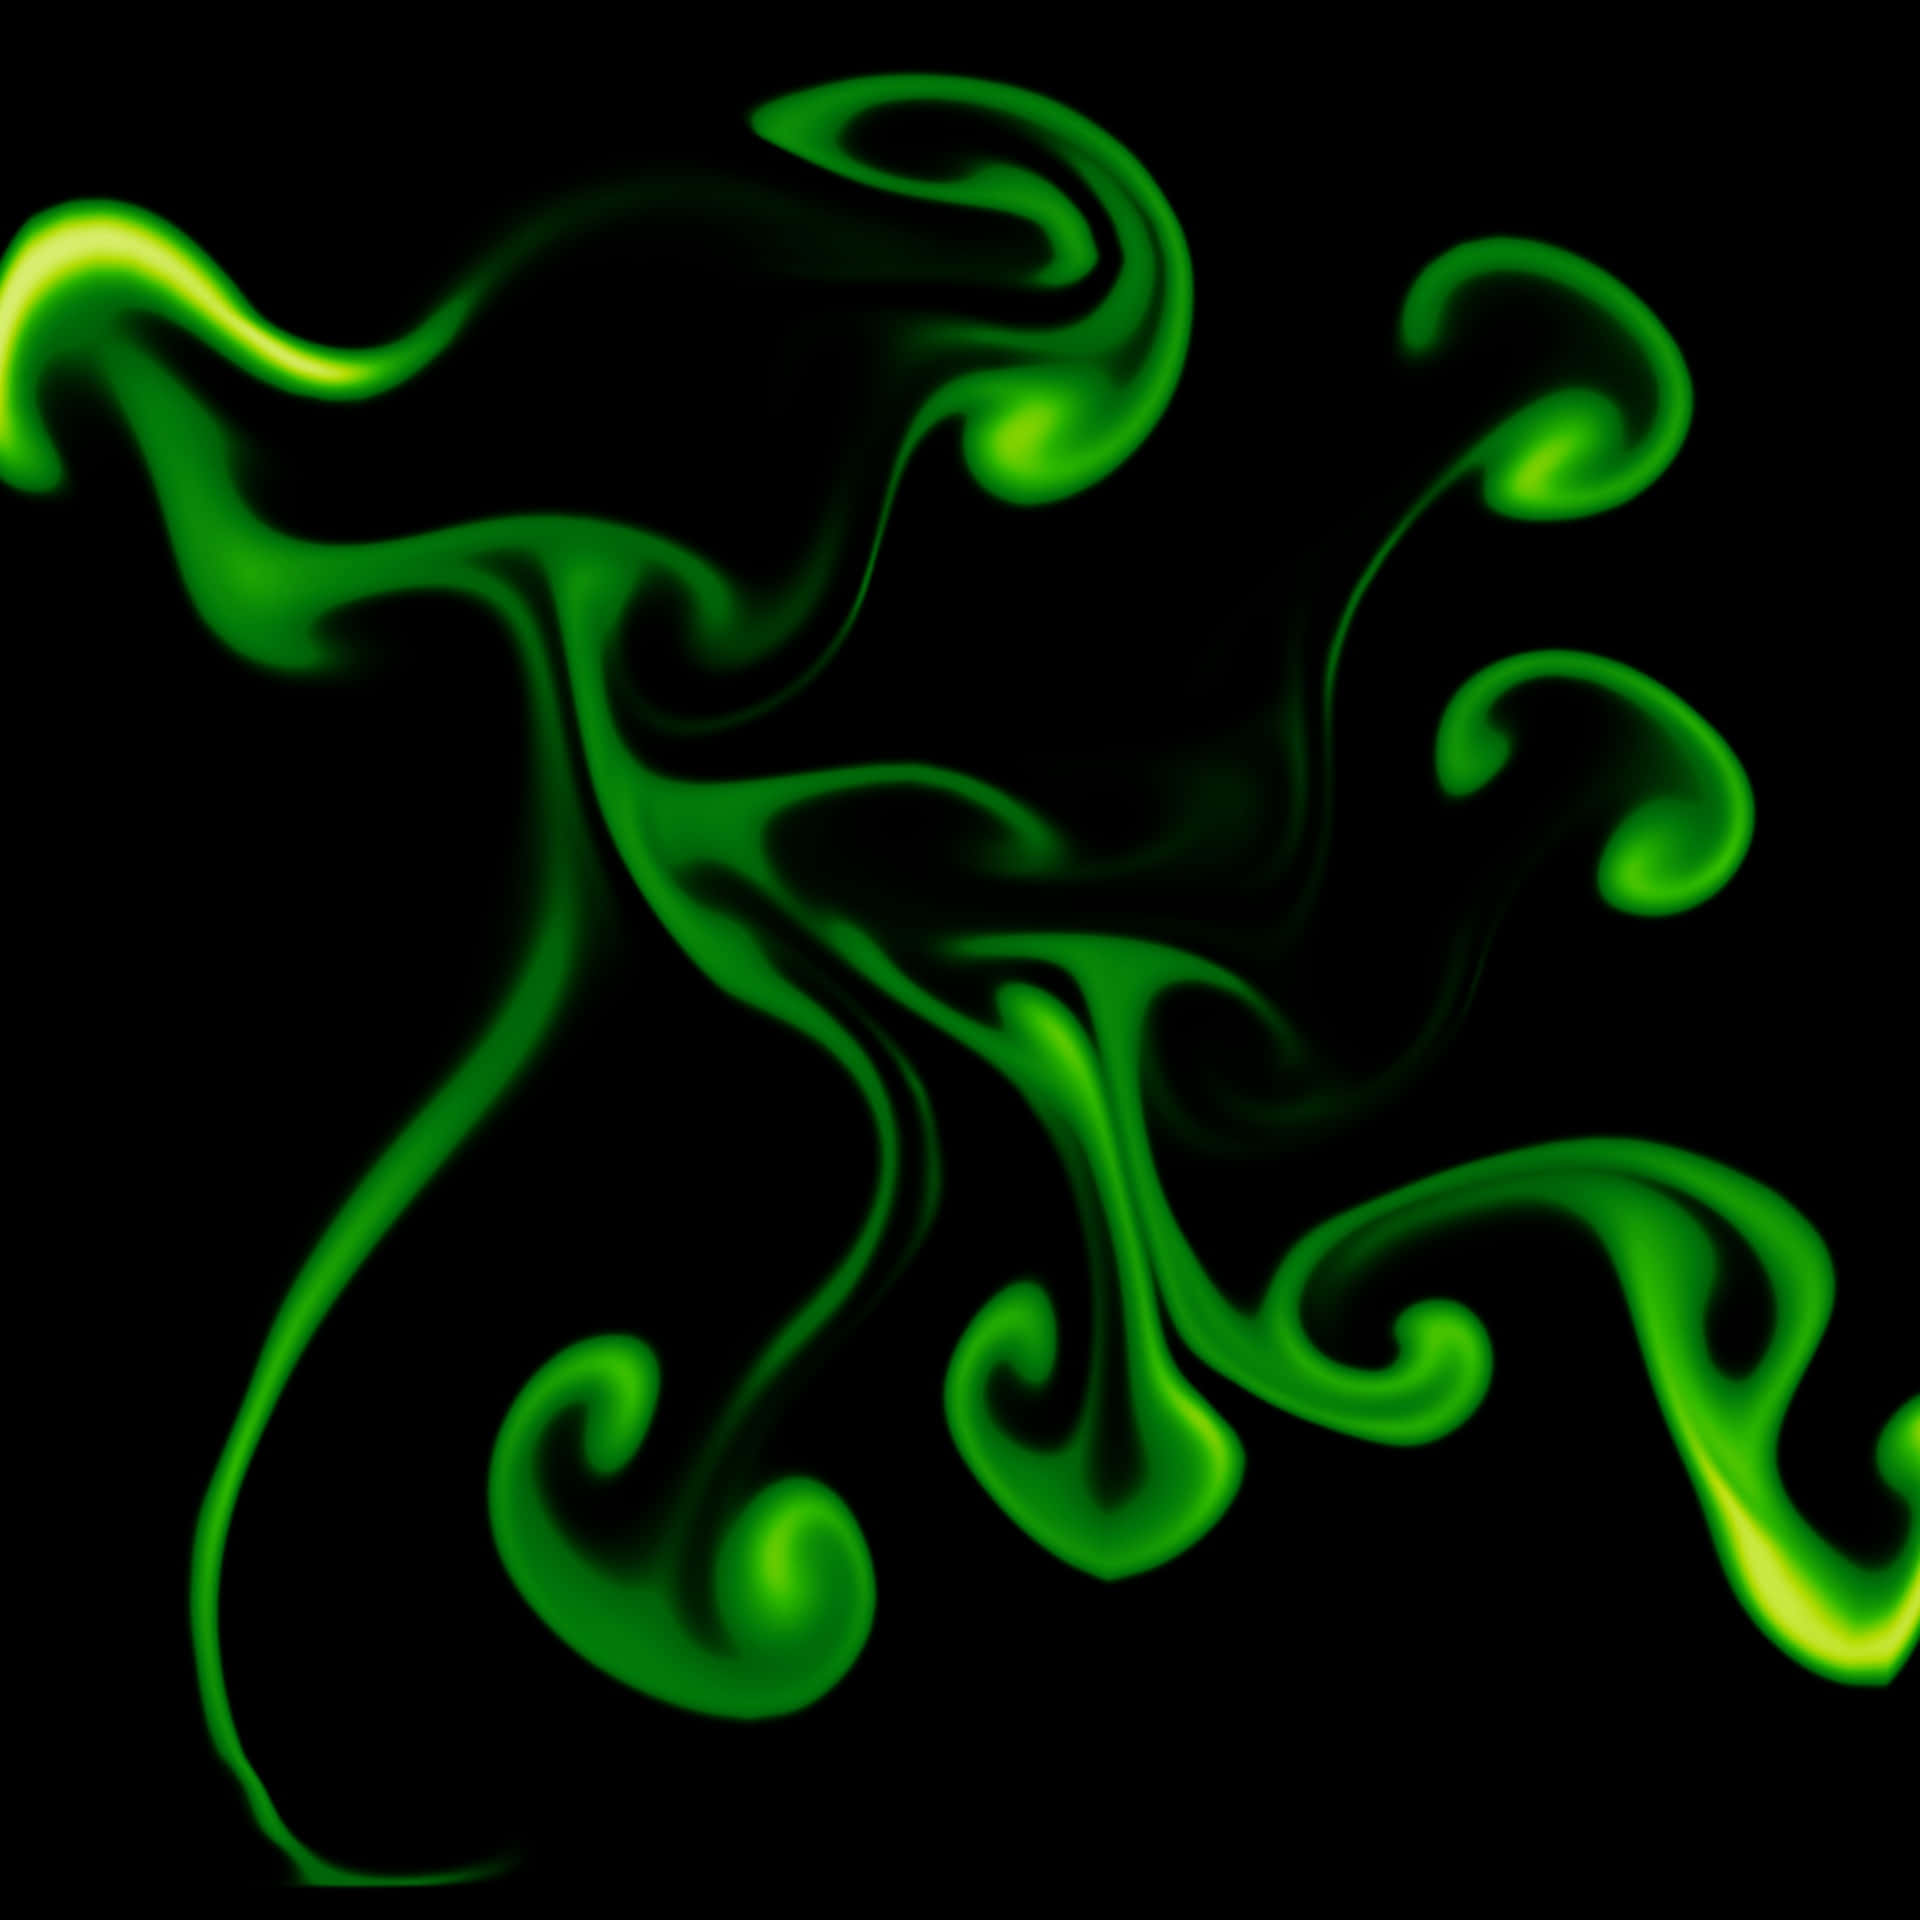 Green Smoke Swirls And Twirls Wallpaper